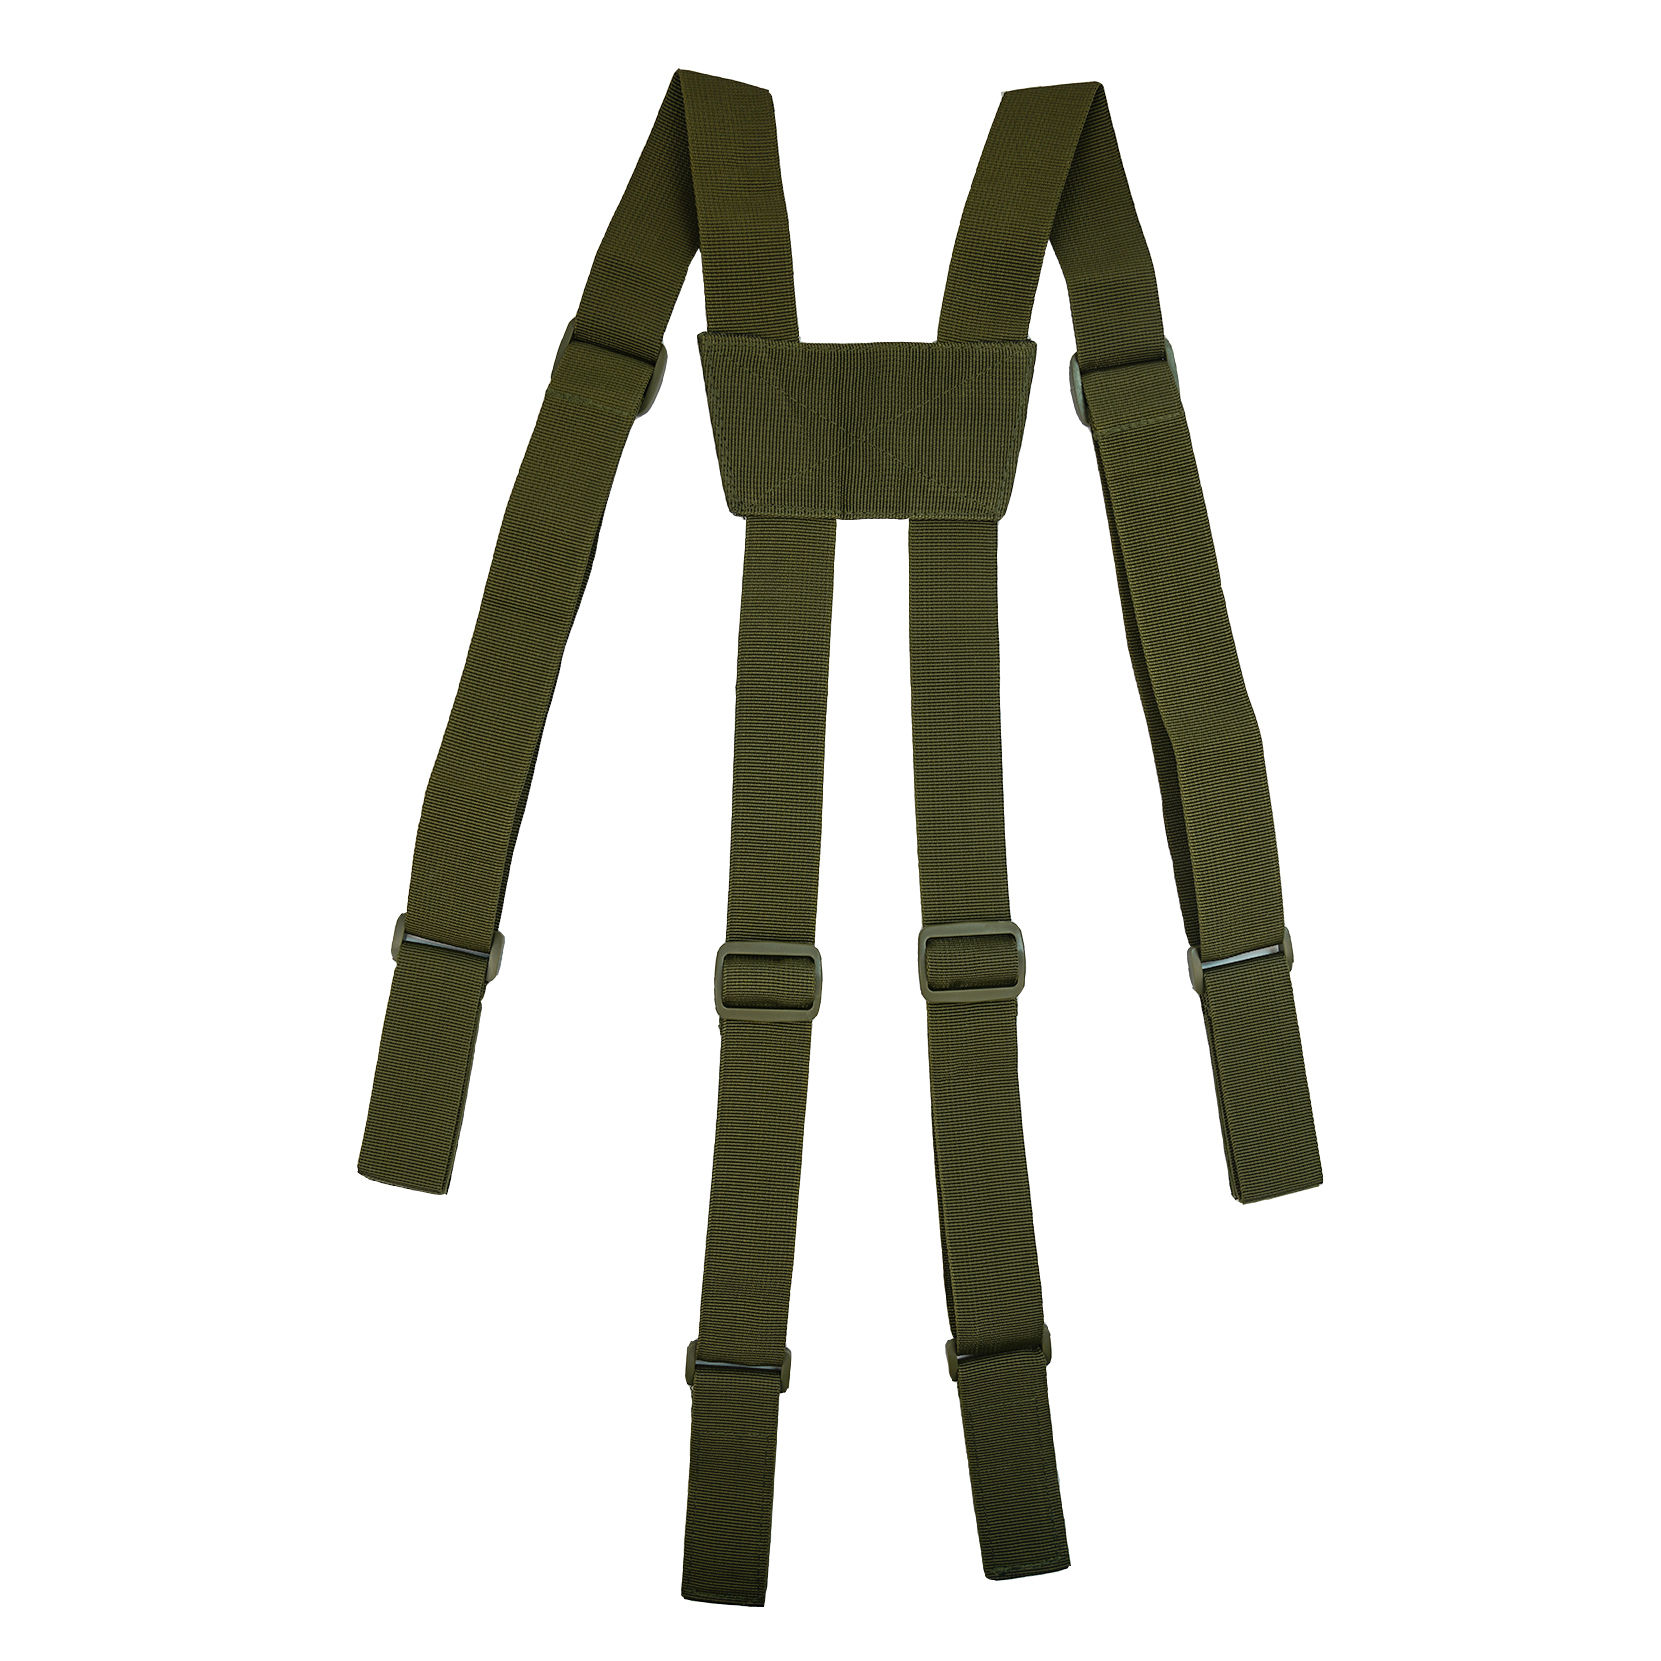 Tactical Suspenders Tactical Duty Belt Harness Padded Police Outdoor Combat Braces